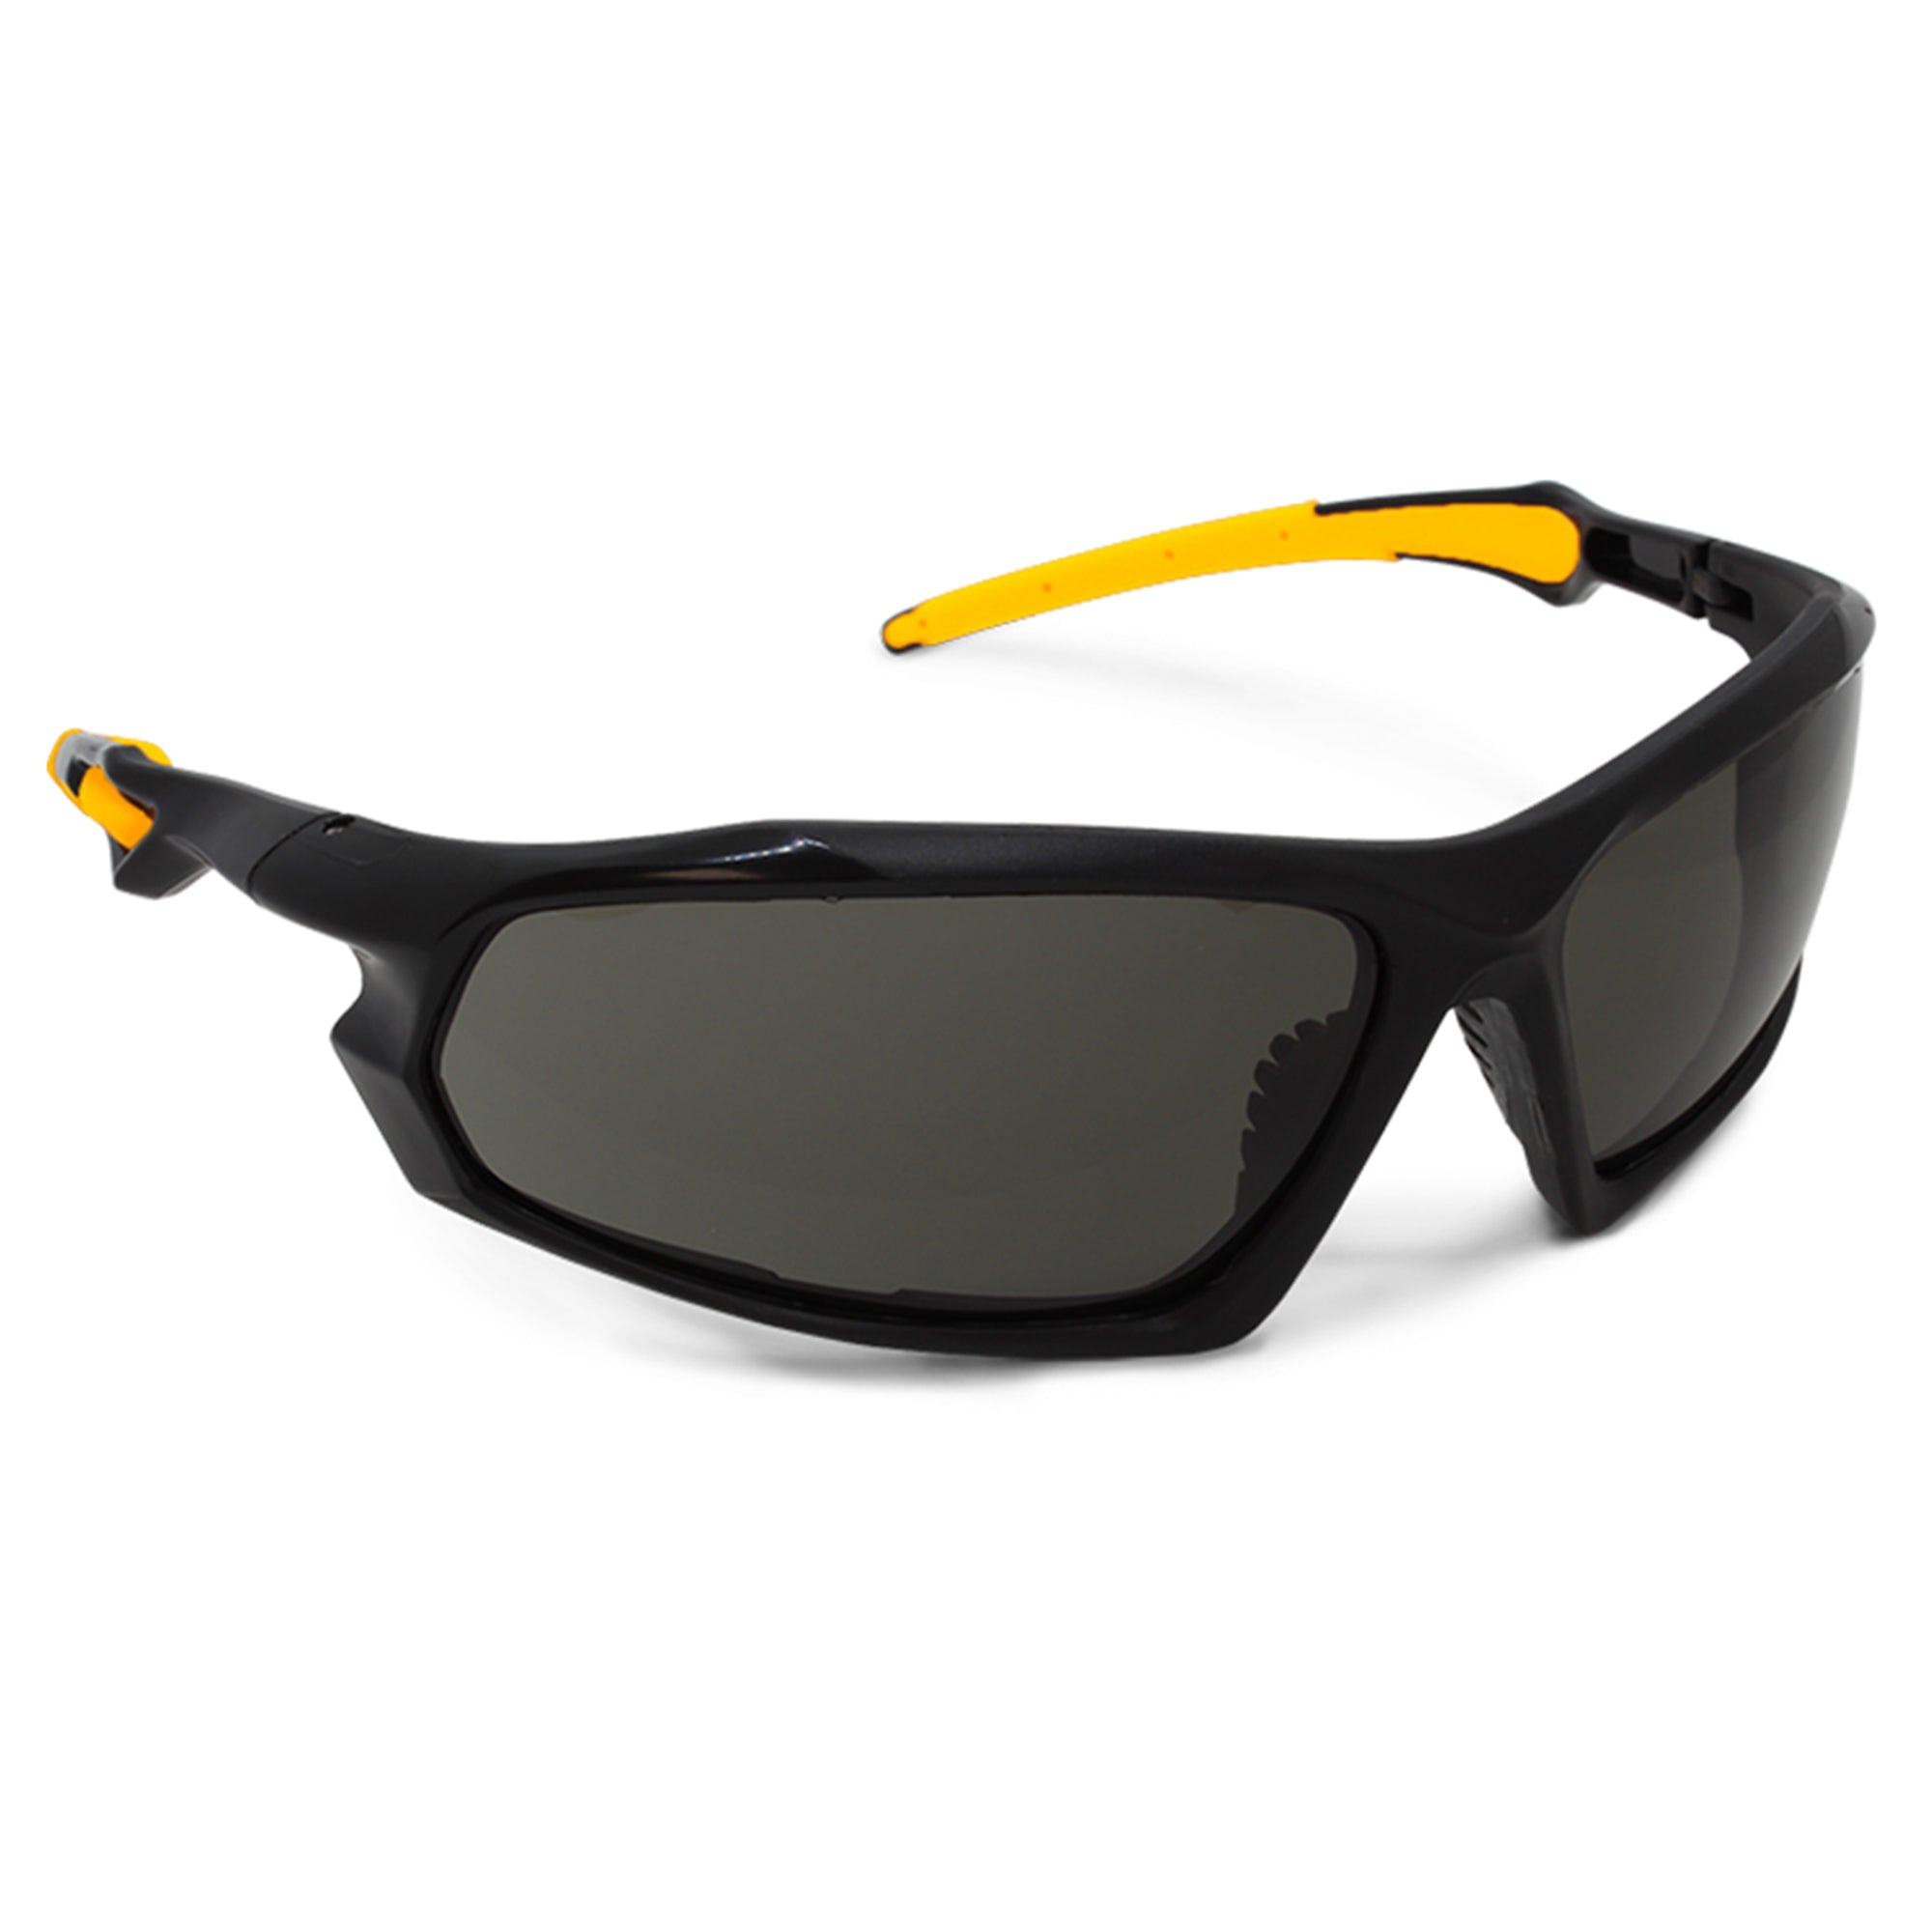 WORKHORSE® Ballistic Eyewear with Light Weight Nylon Frame and Premium Anti-Fog, Military Grade Protection, Smoke